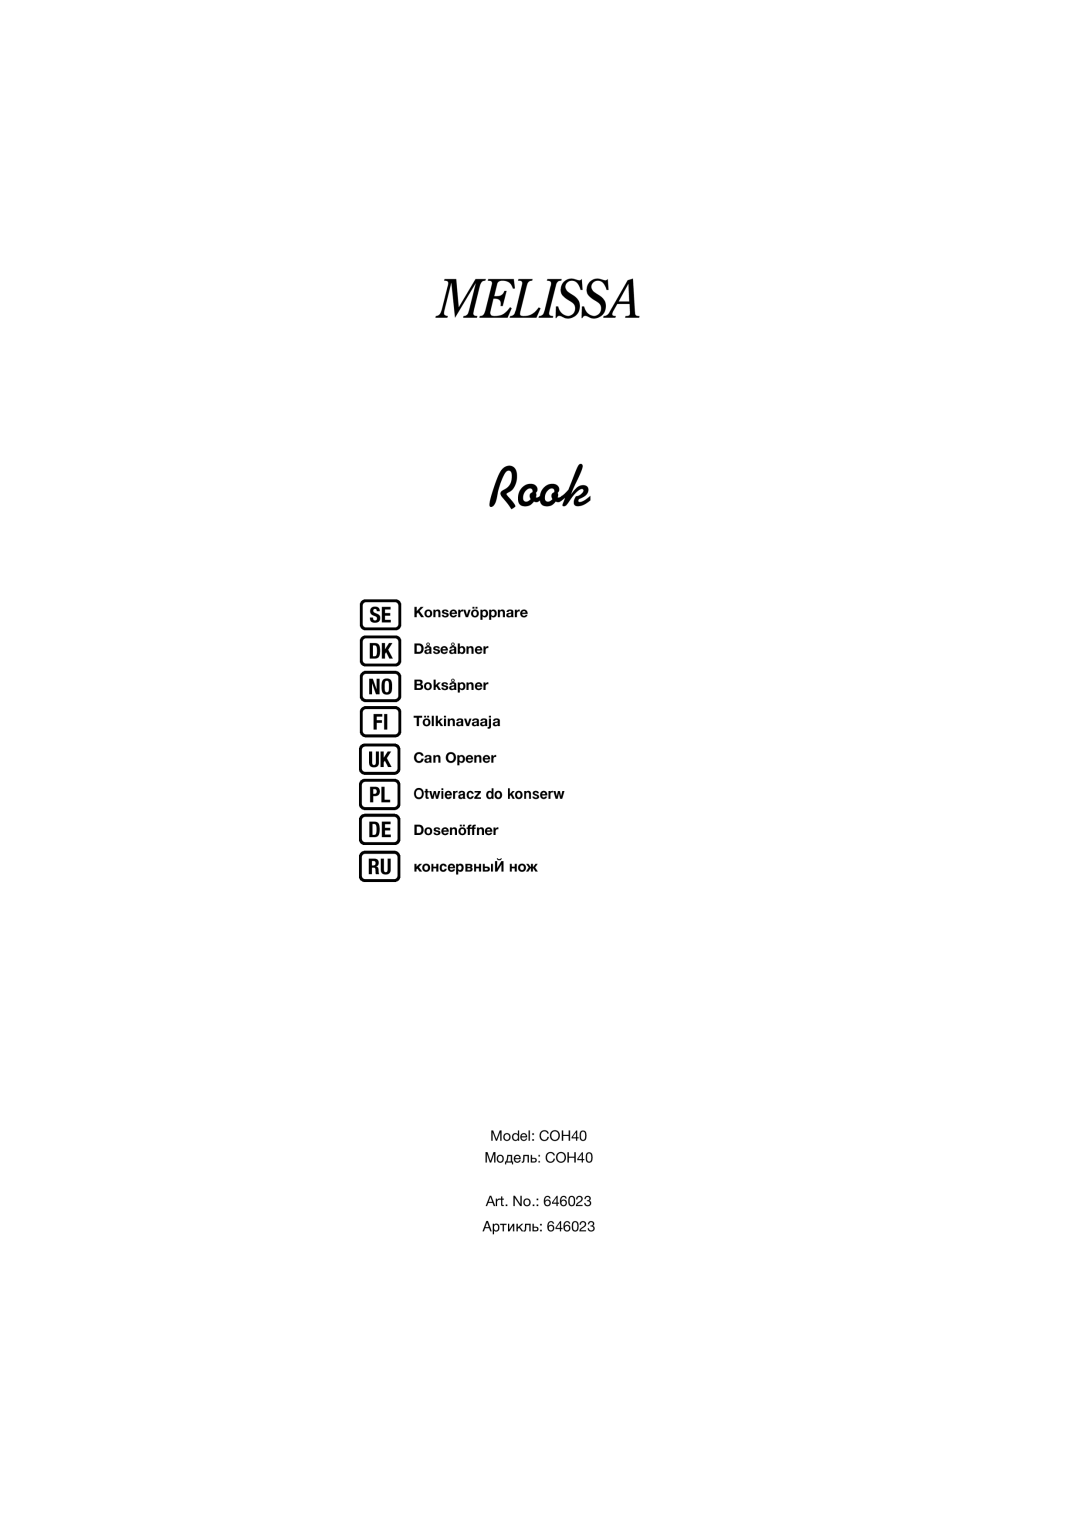 Melissa 8446, 8447 manual Se Dk No Fi Uk Pl De Ru, Konservöppnare Dåseåbner Boksåpner Tölkinavaaja, консервныЙ нож, Rook 